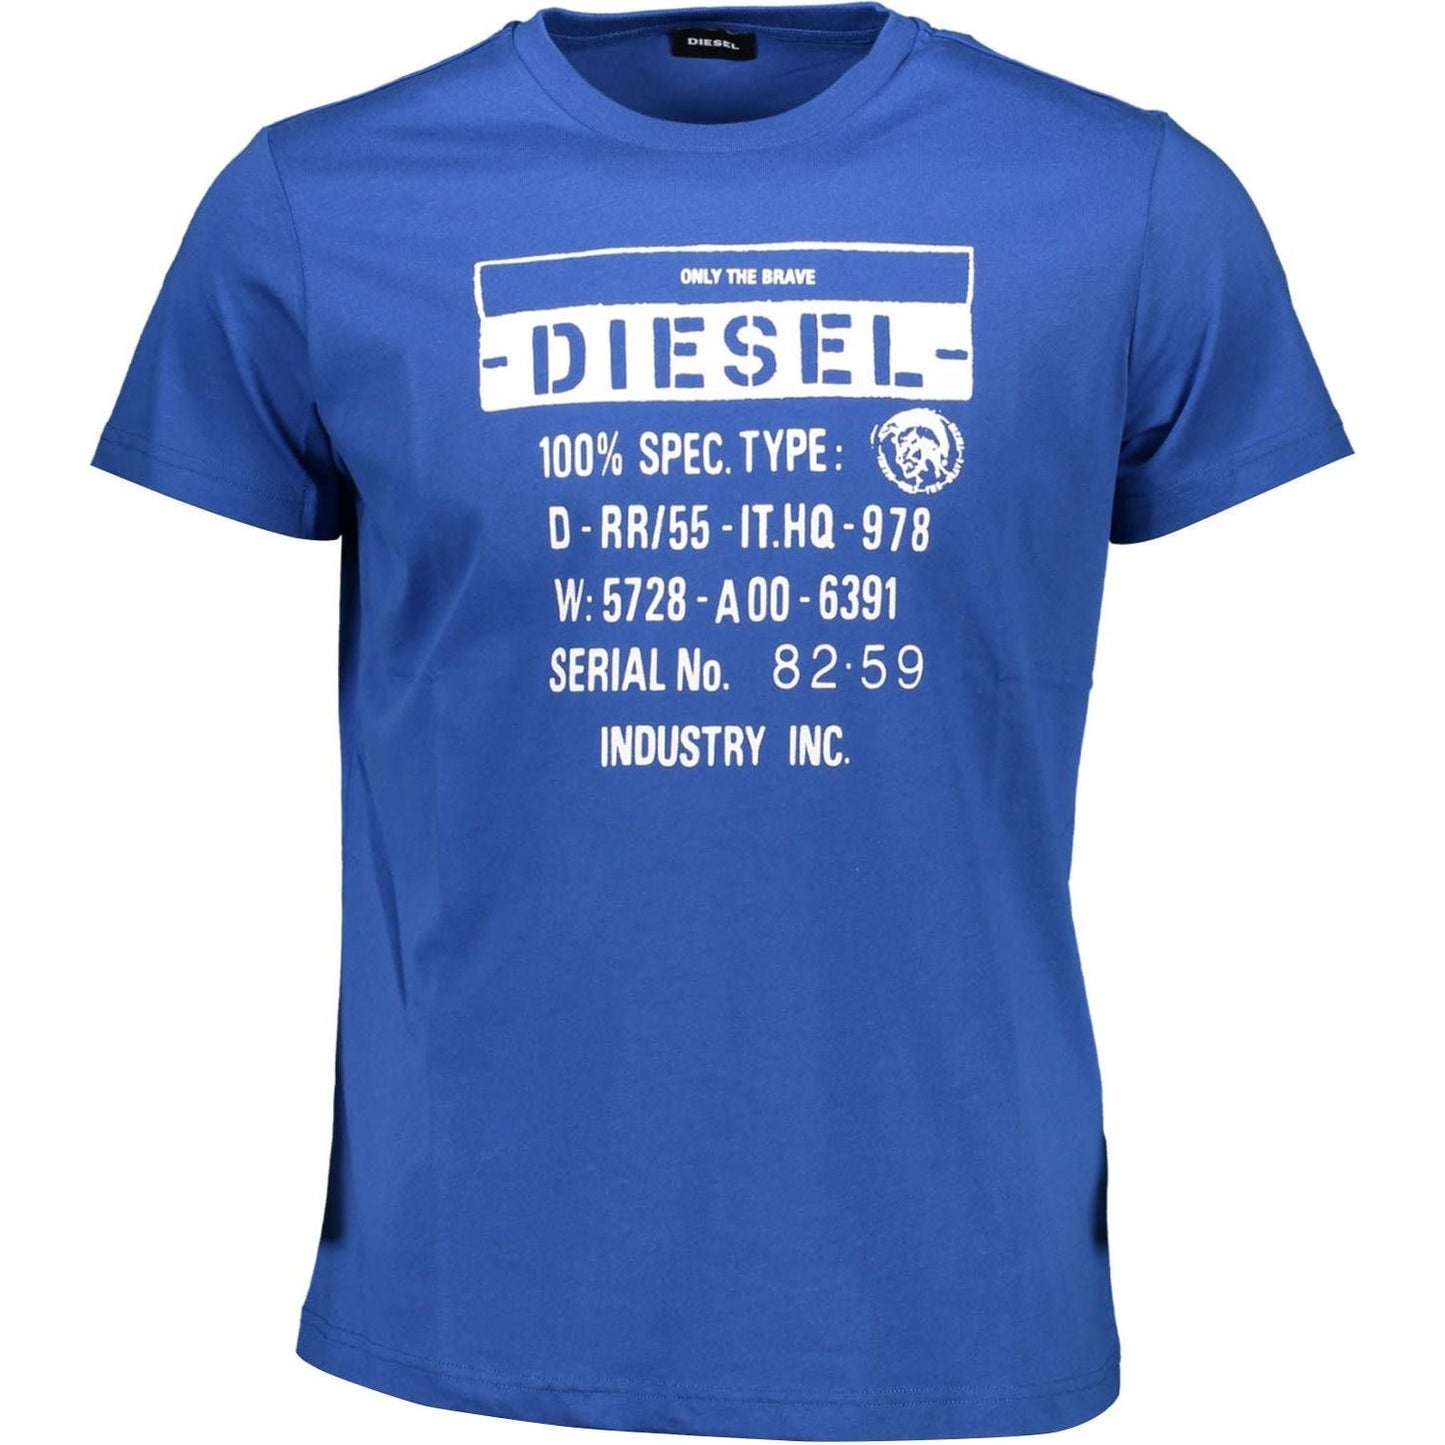 Diesel Sleek Blue Crew Neck Cotton Tee sleek-blue-crew-neck-cotton-tee